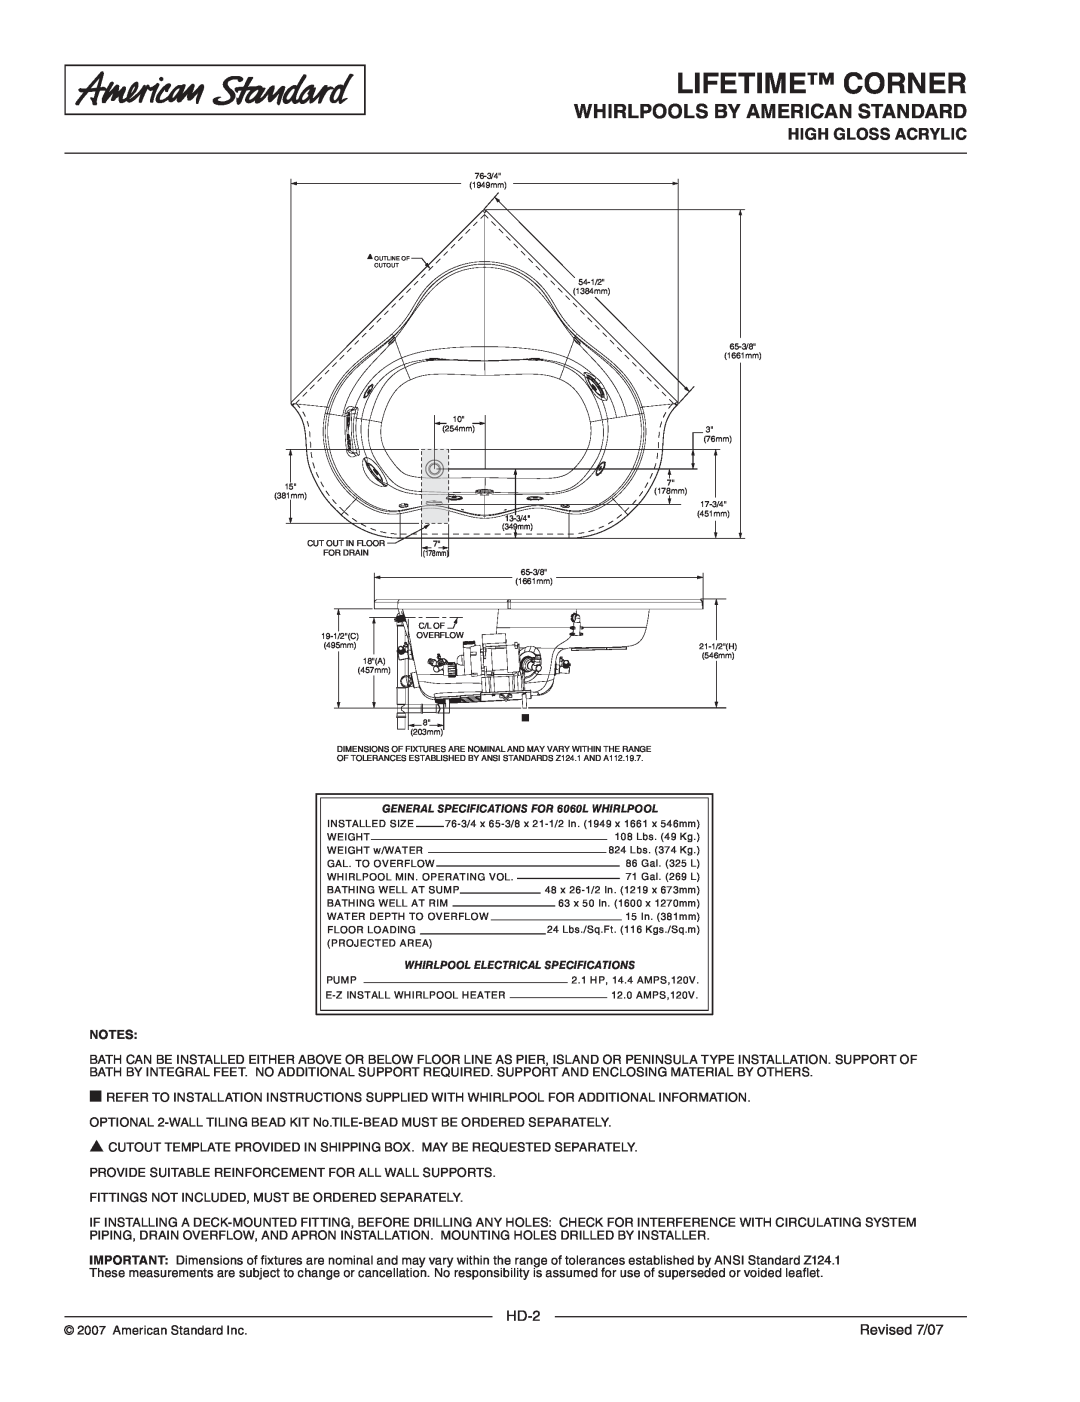 American Standard 6060LC Lifetime Corner, Whirlpools By American Standard, High Gloss Acrylic, HD-2, Revised 7/07 